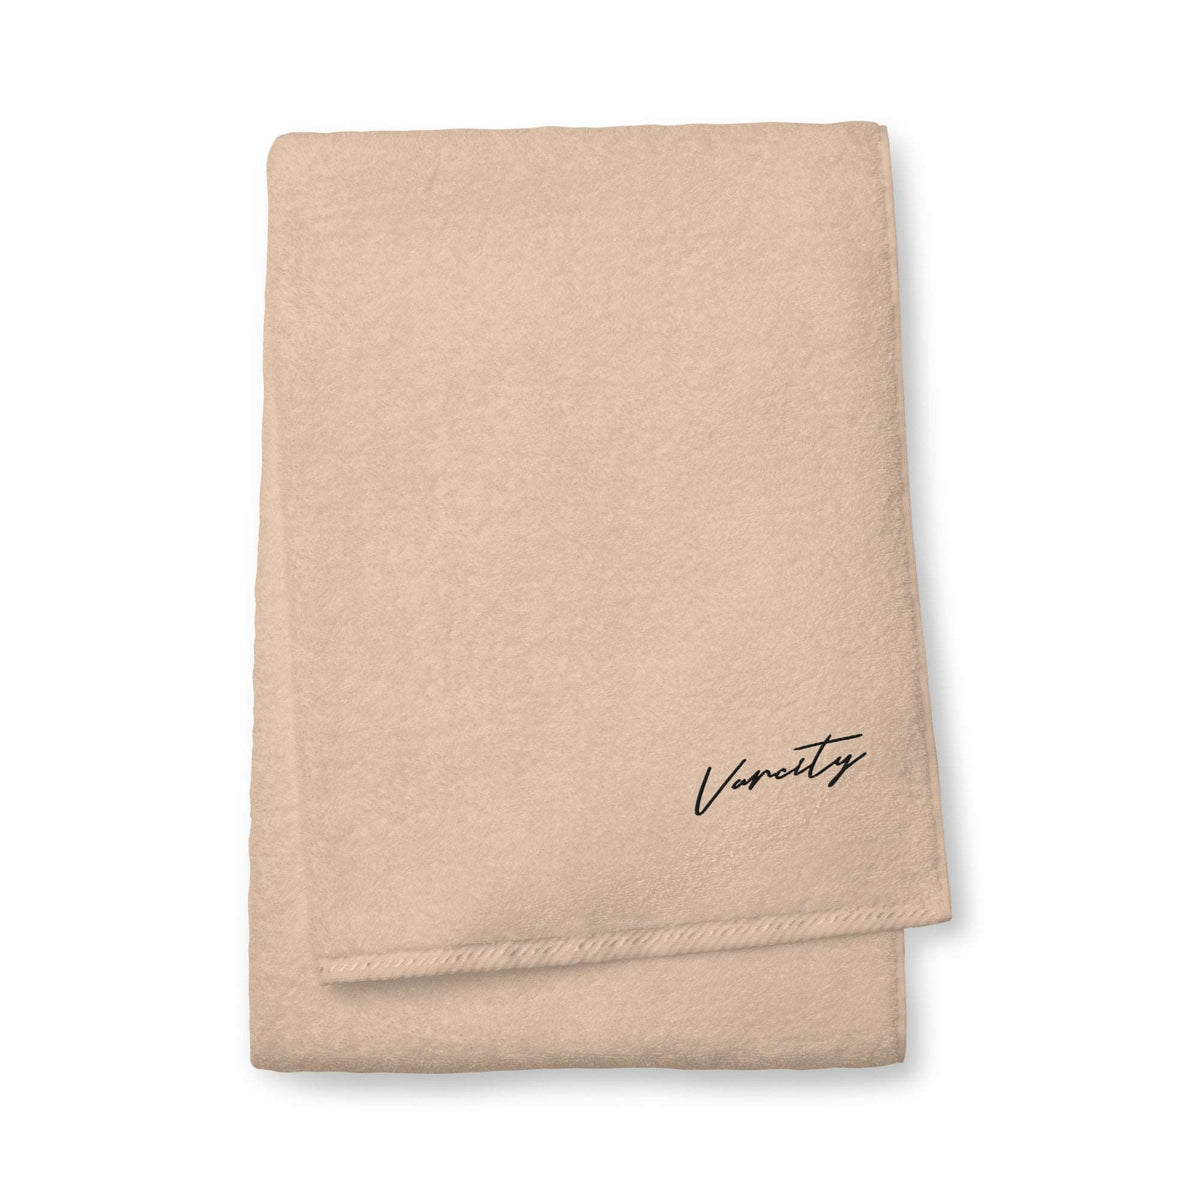 Varcity Unlimited Premium Turkish Cotton Towel